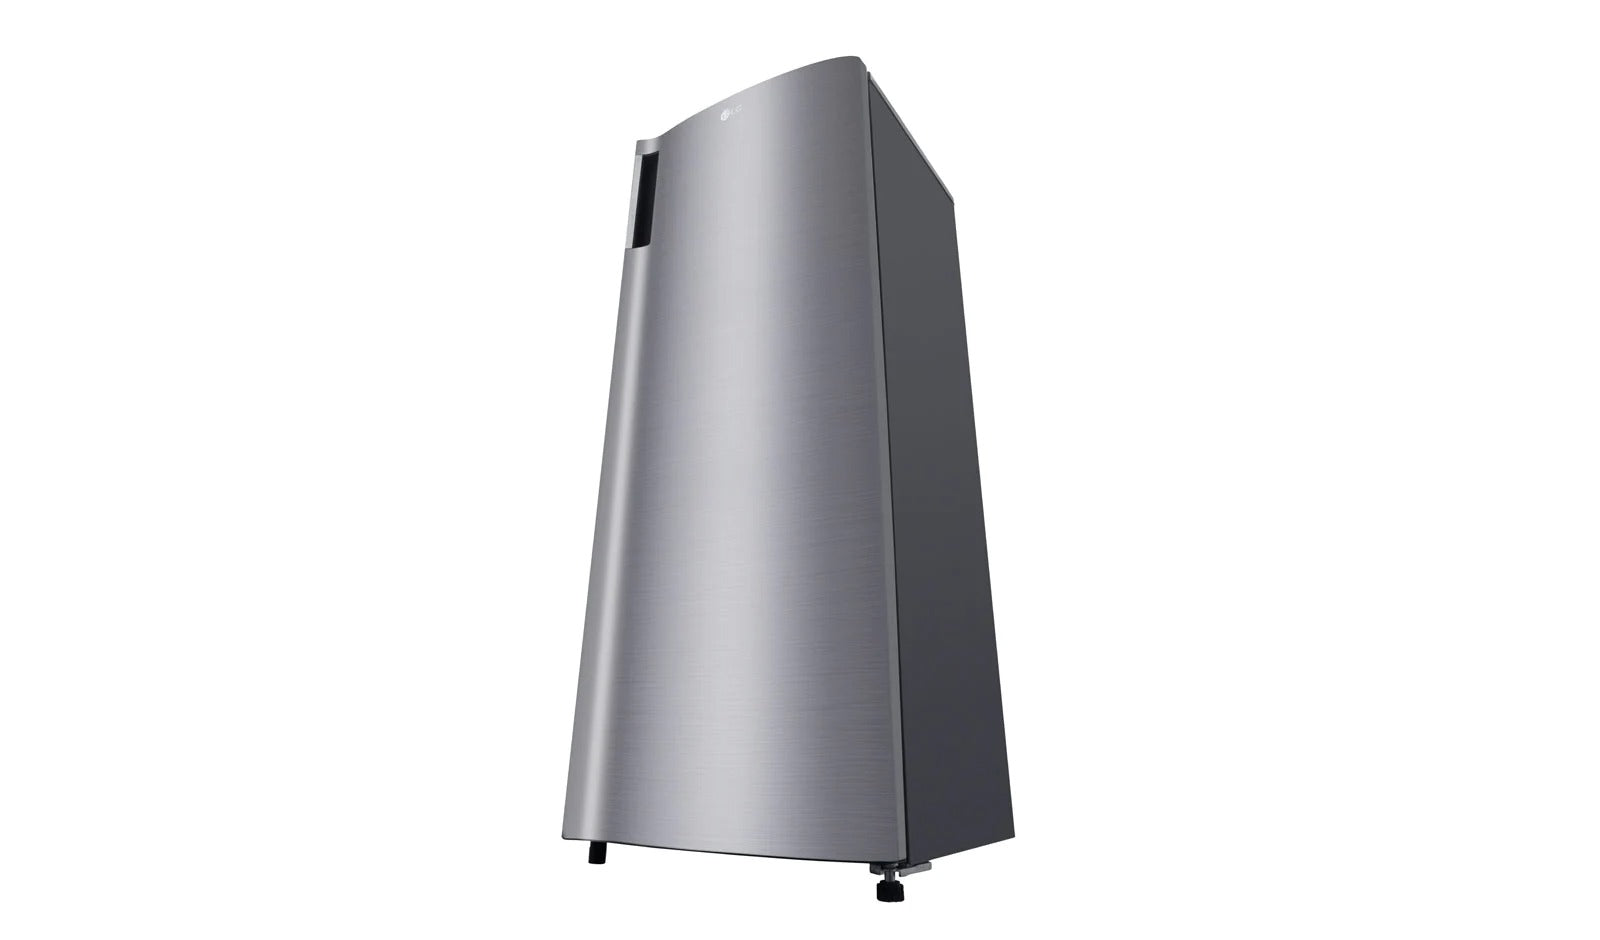 LG GR-V204SLBT 6.0 cu.ft. Smart Inverter Refrigerator LG